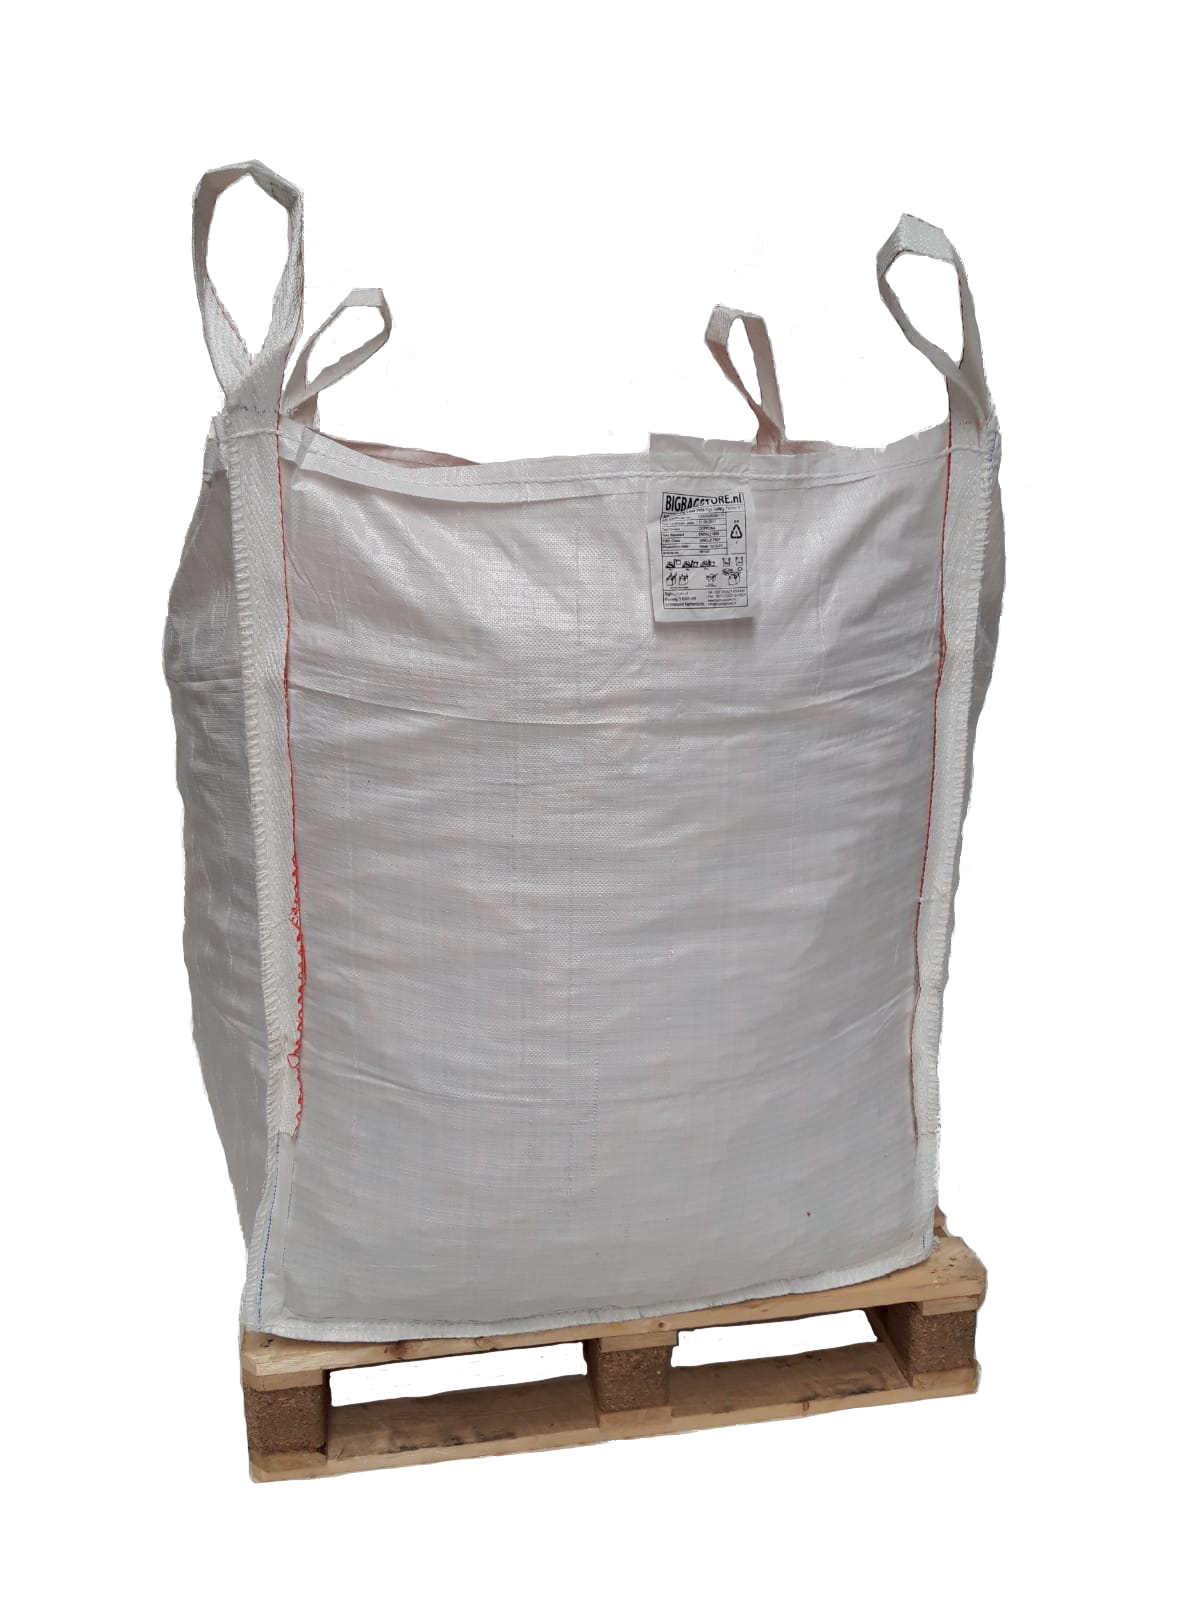 BIG BAG 4 Stk Bags BIGBAGS Bigbag 1000kg Versandkostenfrei! 140 cm hoch 